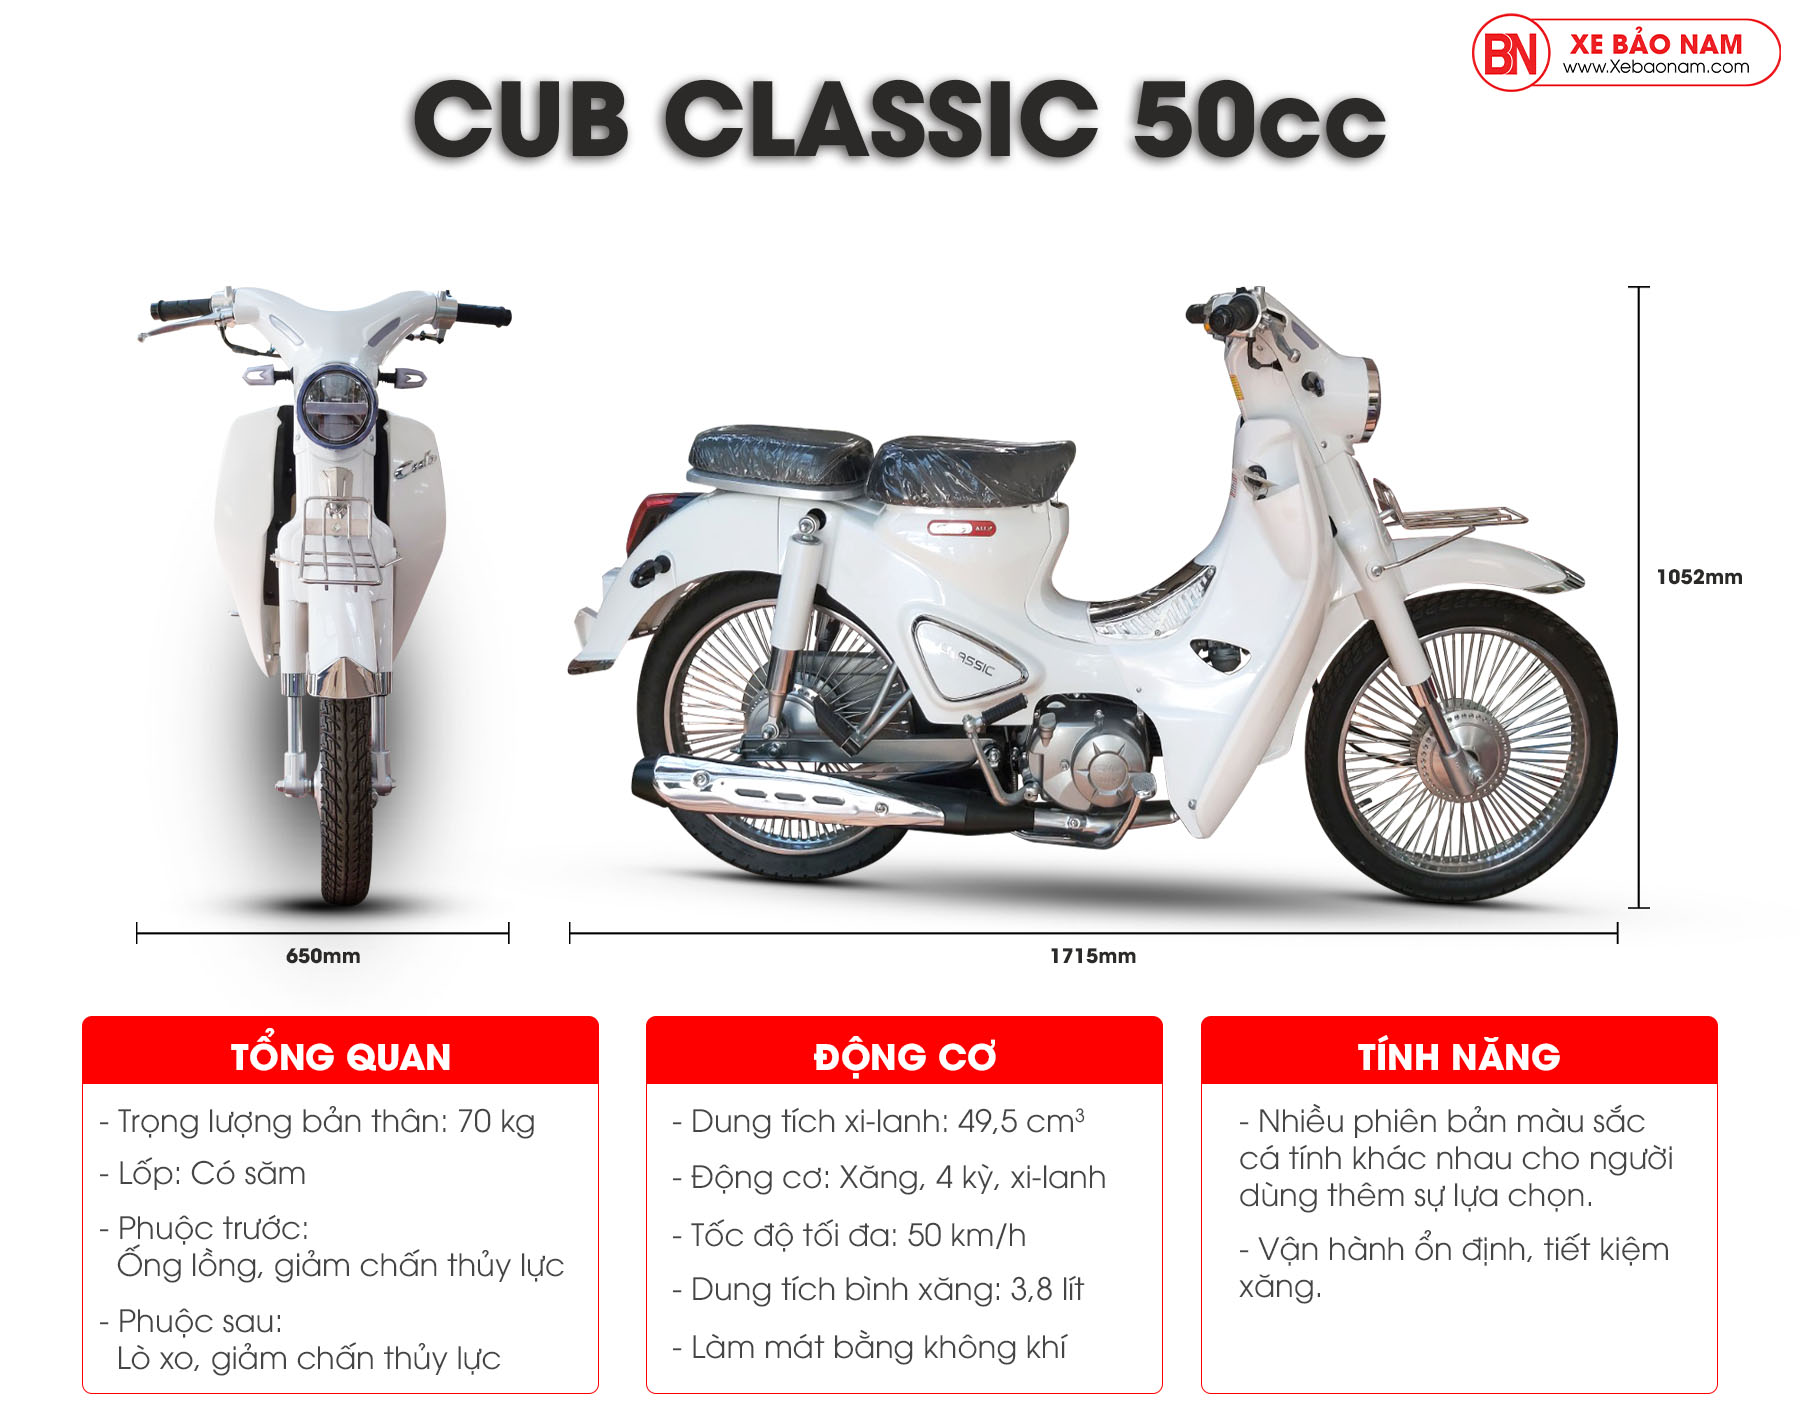 Tổng quan xe cub classic 50cc